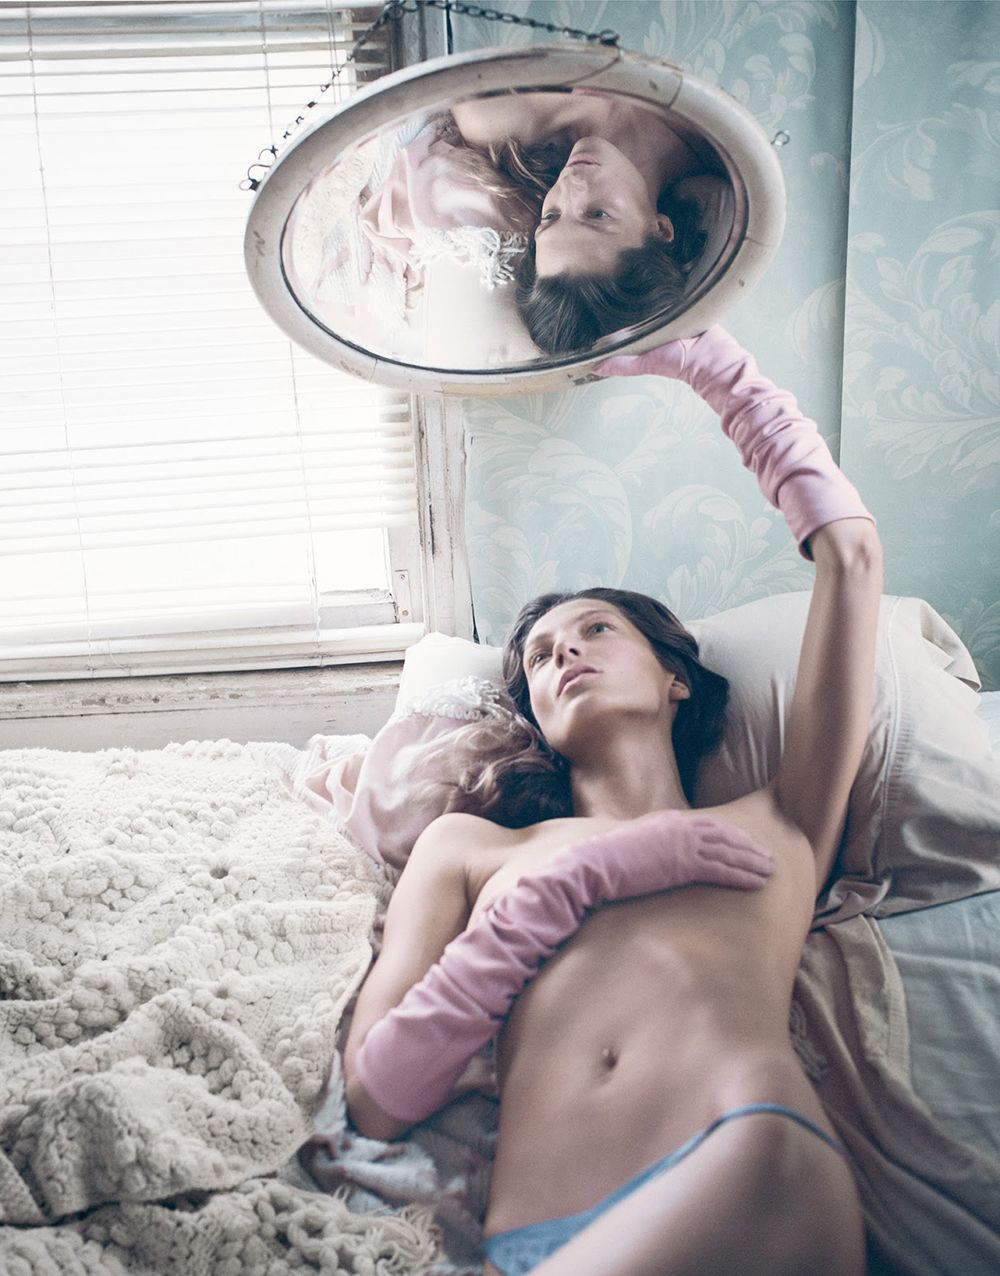 Daria Werbowy Topless (8 Photos)